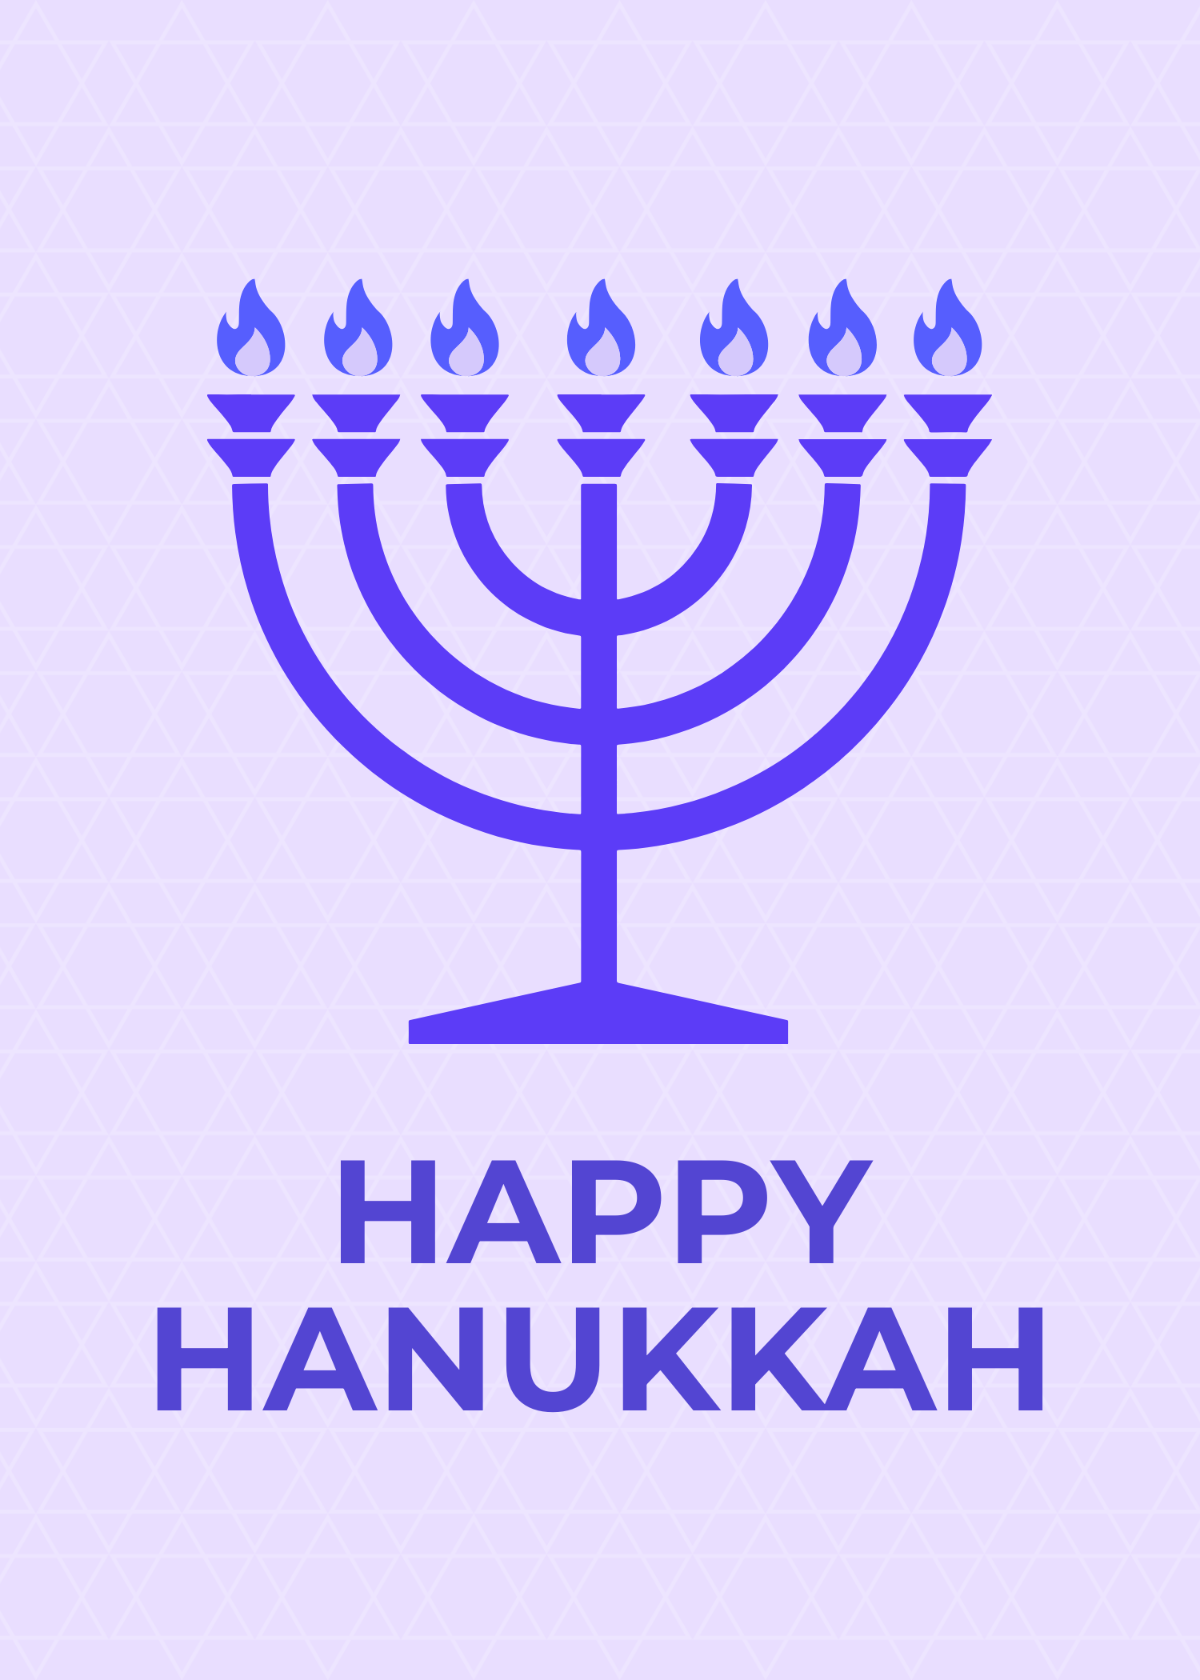 Free Hanukkah Greeting Card Template